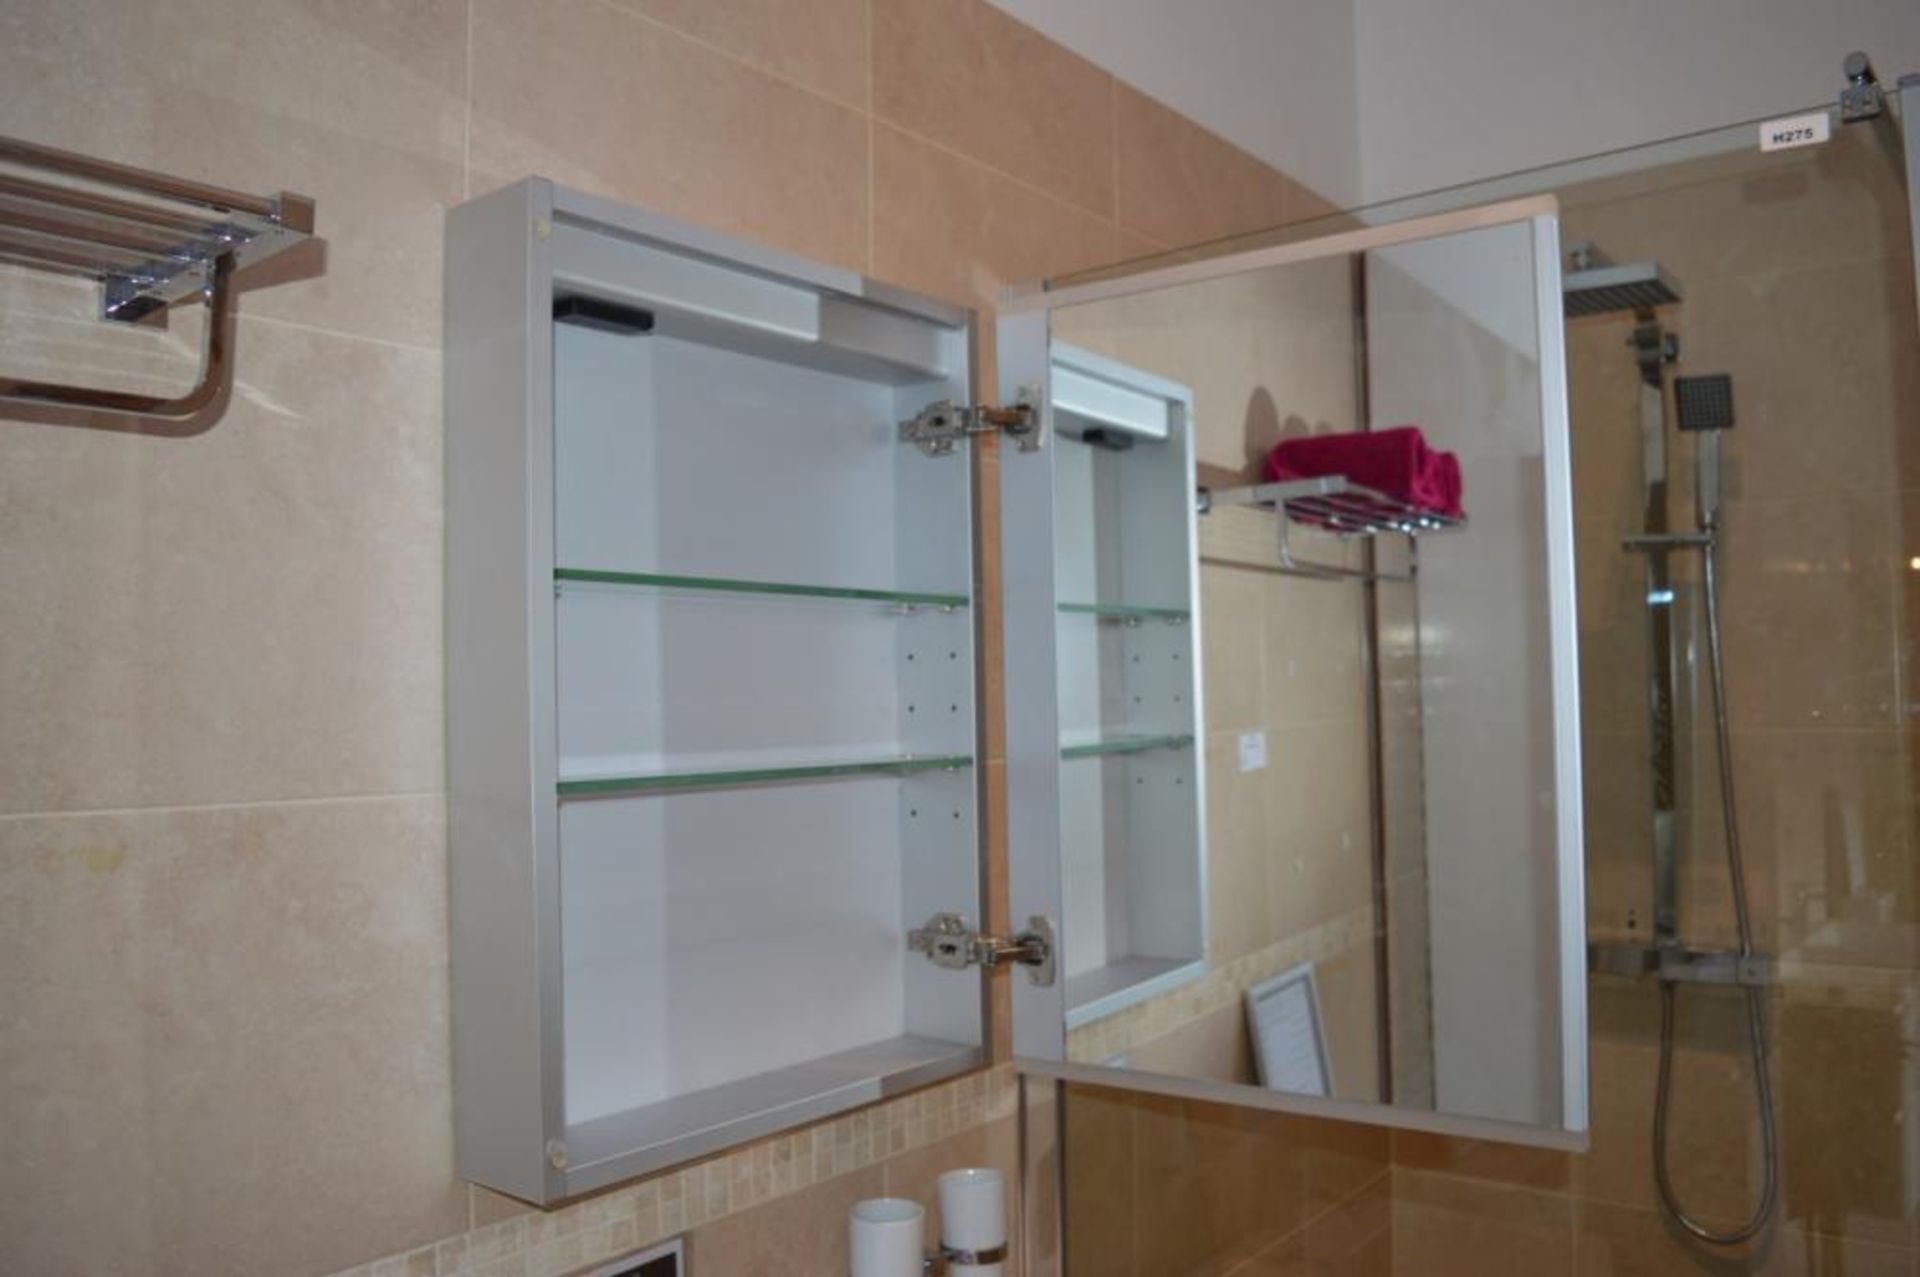 1 x Voda Design Mirrored Bathroom Cabinet 303 Aluminium With Balck Light and Shaver Socket - H70 x W